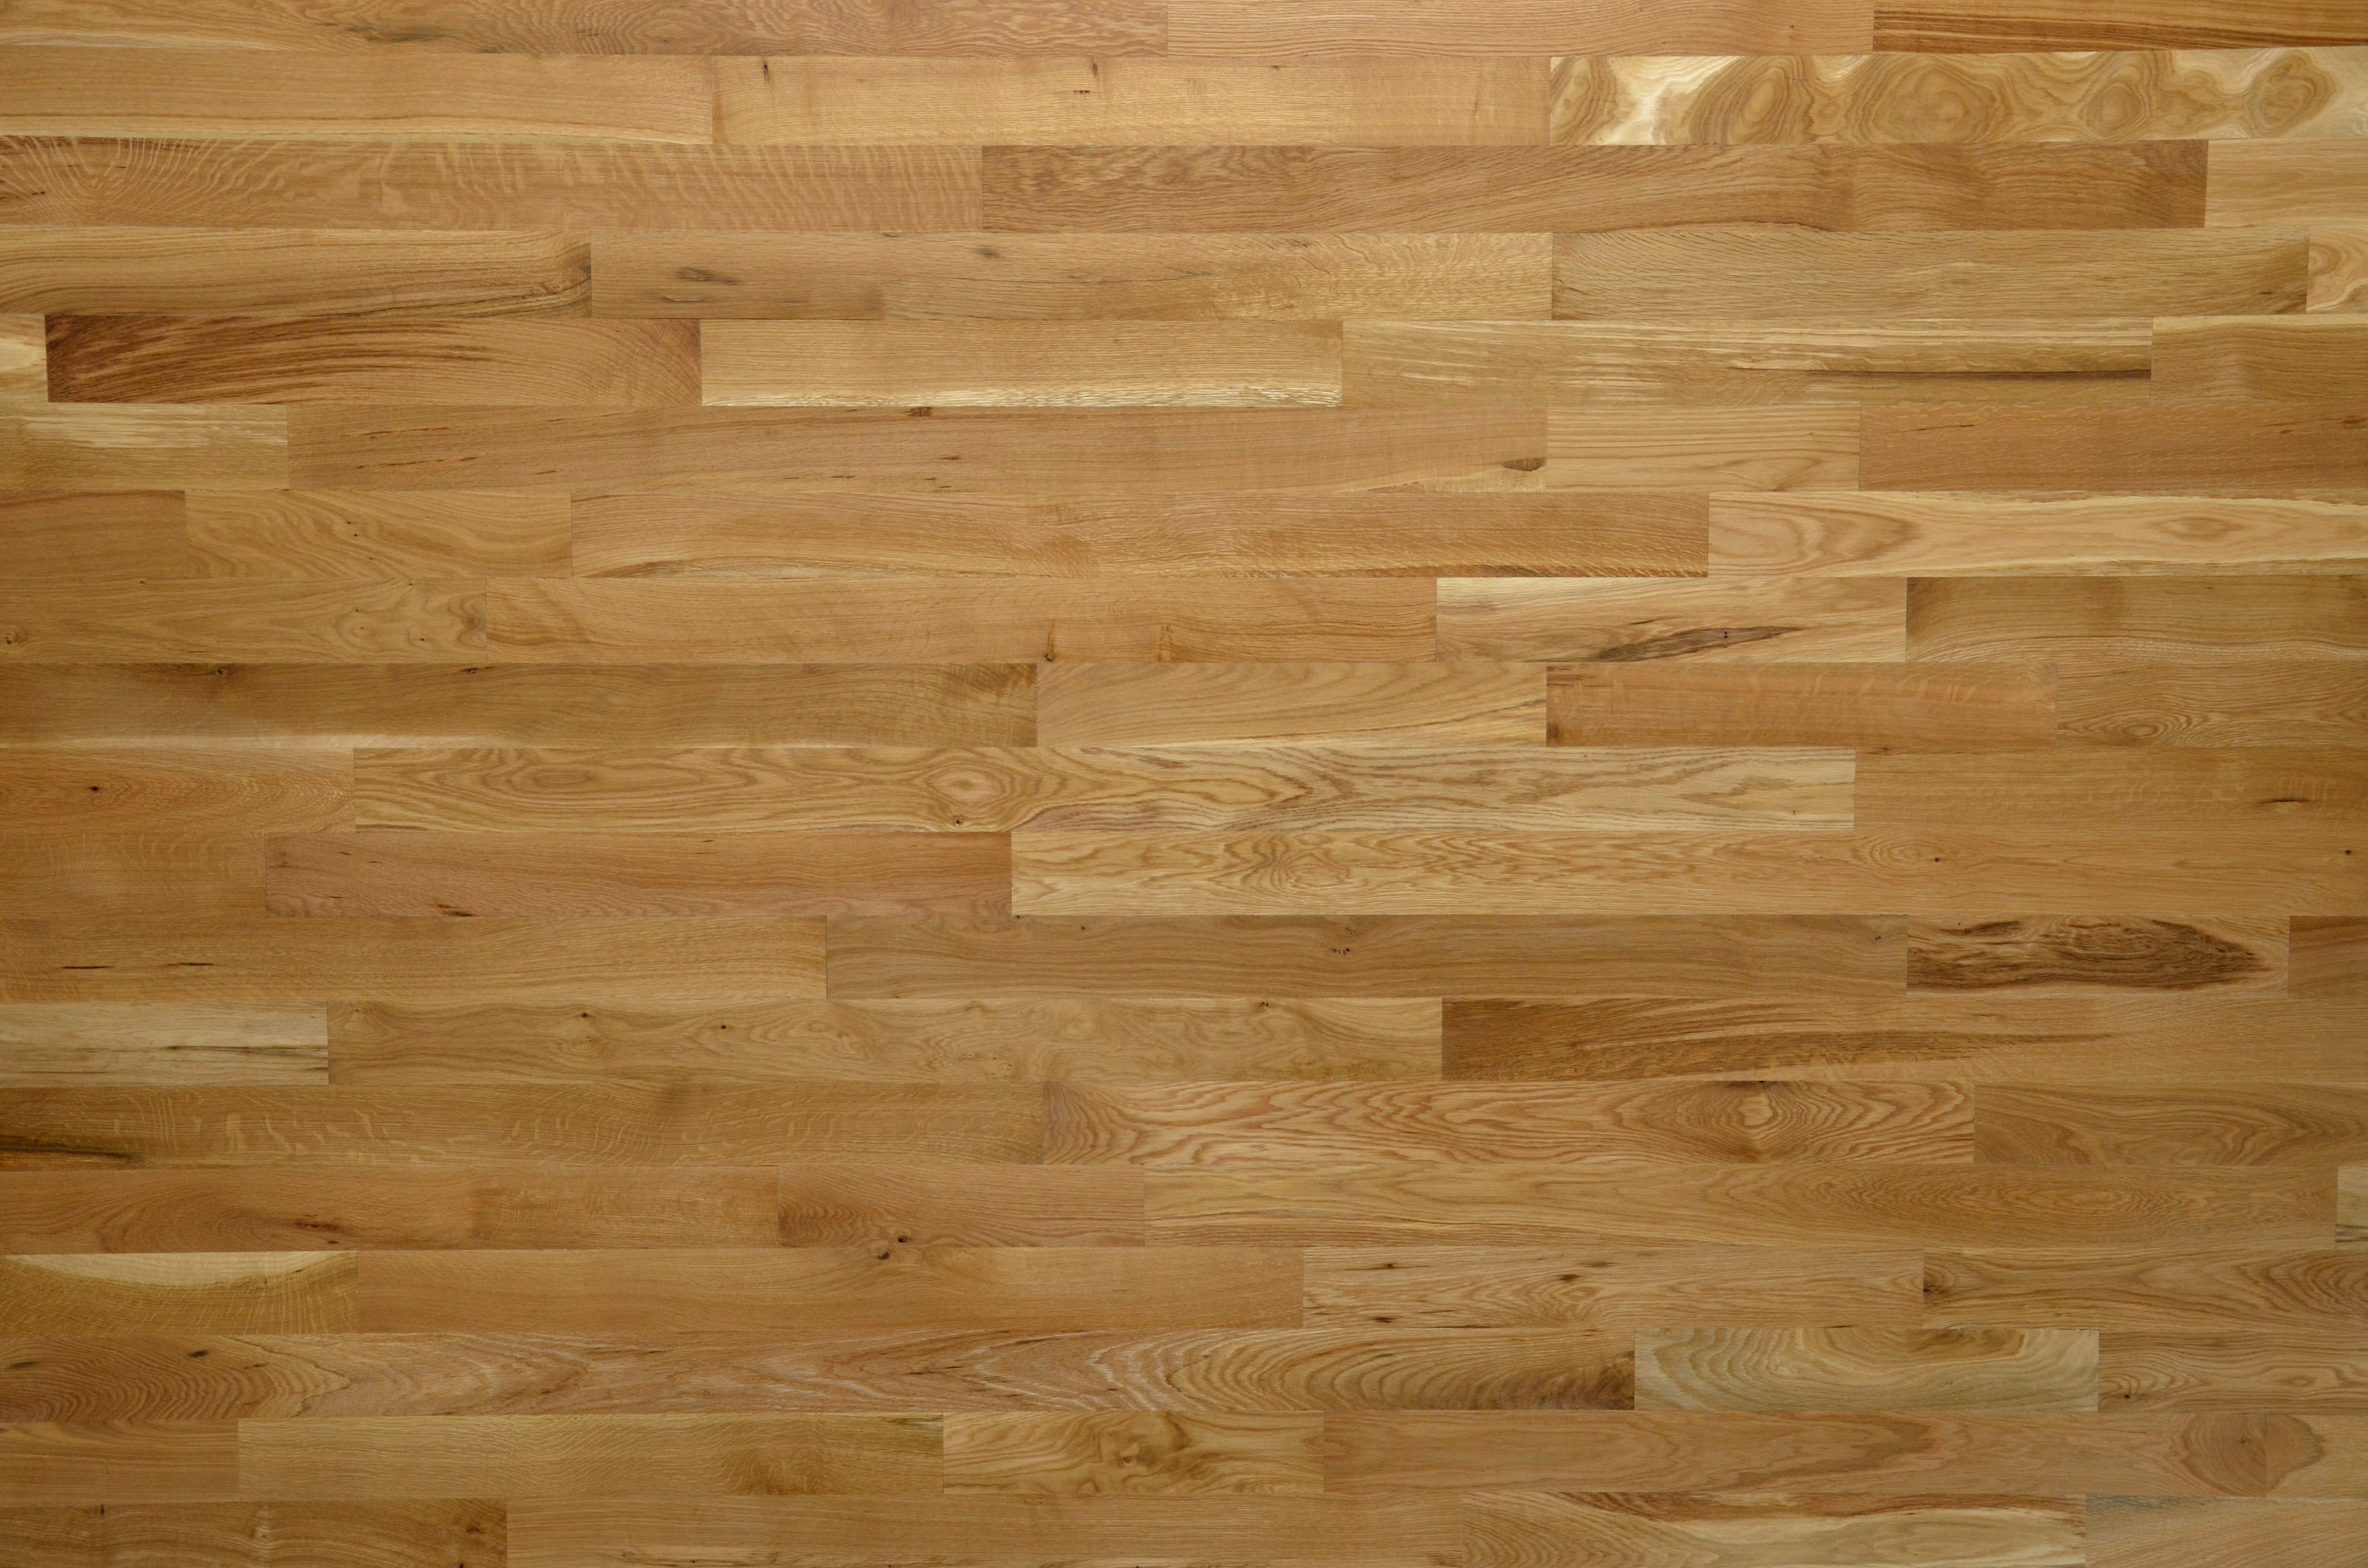 19 Great Hardwood Floor Colors 2017 2024 free download hardwood floor colors 2017 of lacrosse hardwood flooring walnut white oak red oak hickory inside 1 common white oak